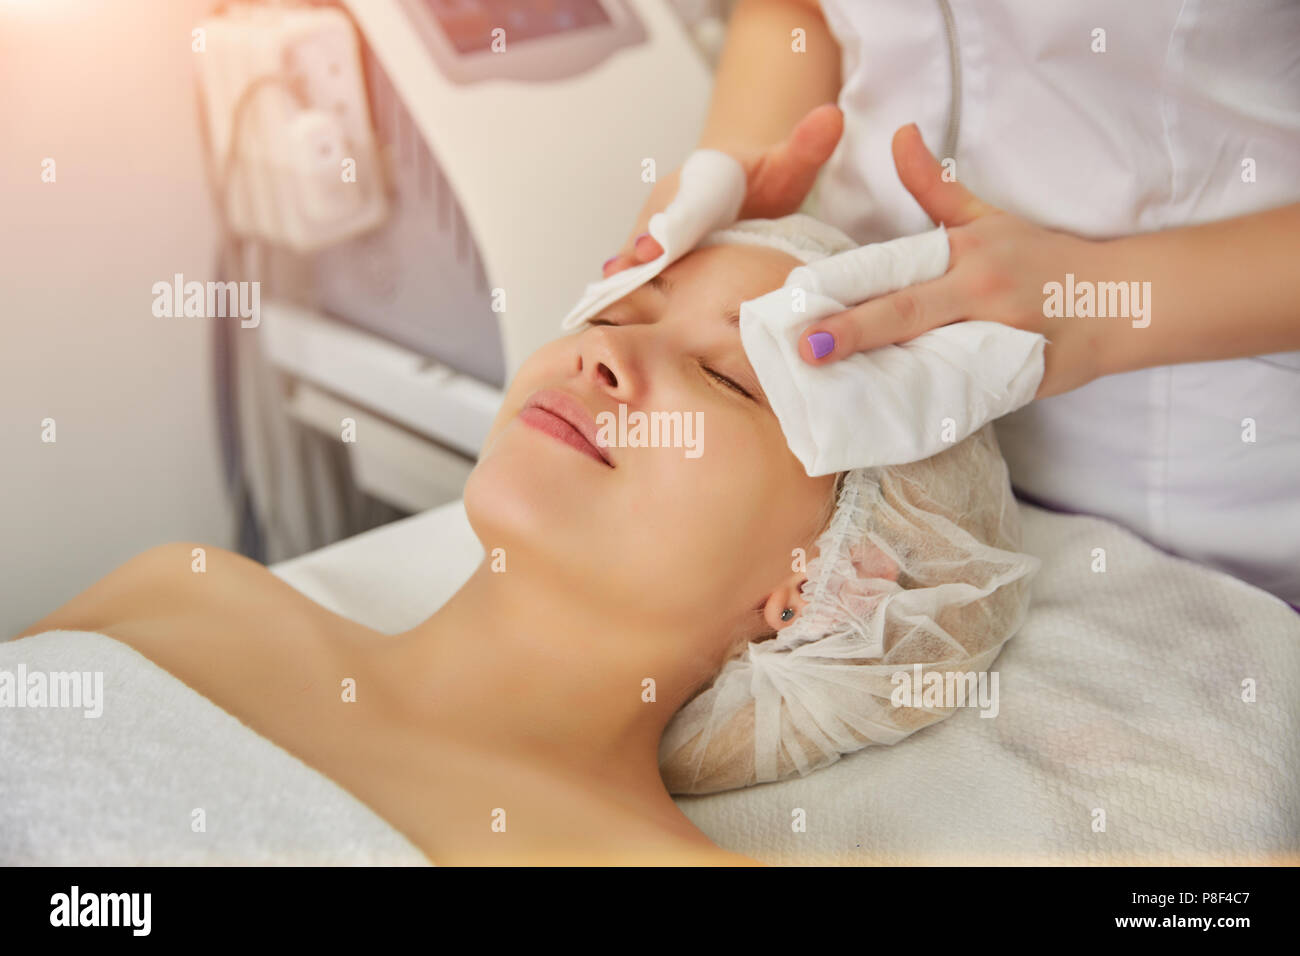 Woman receiving spa treatment Banque D'Images